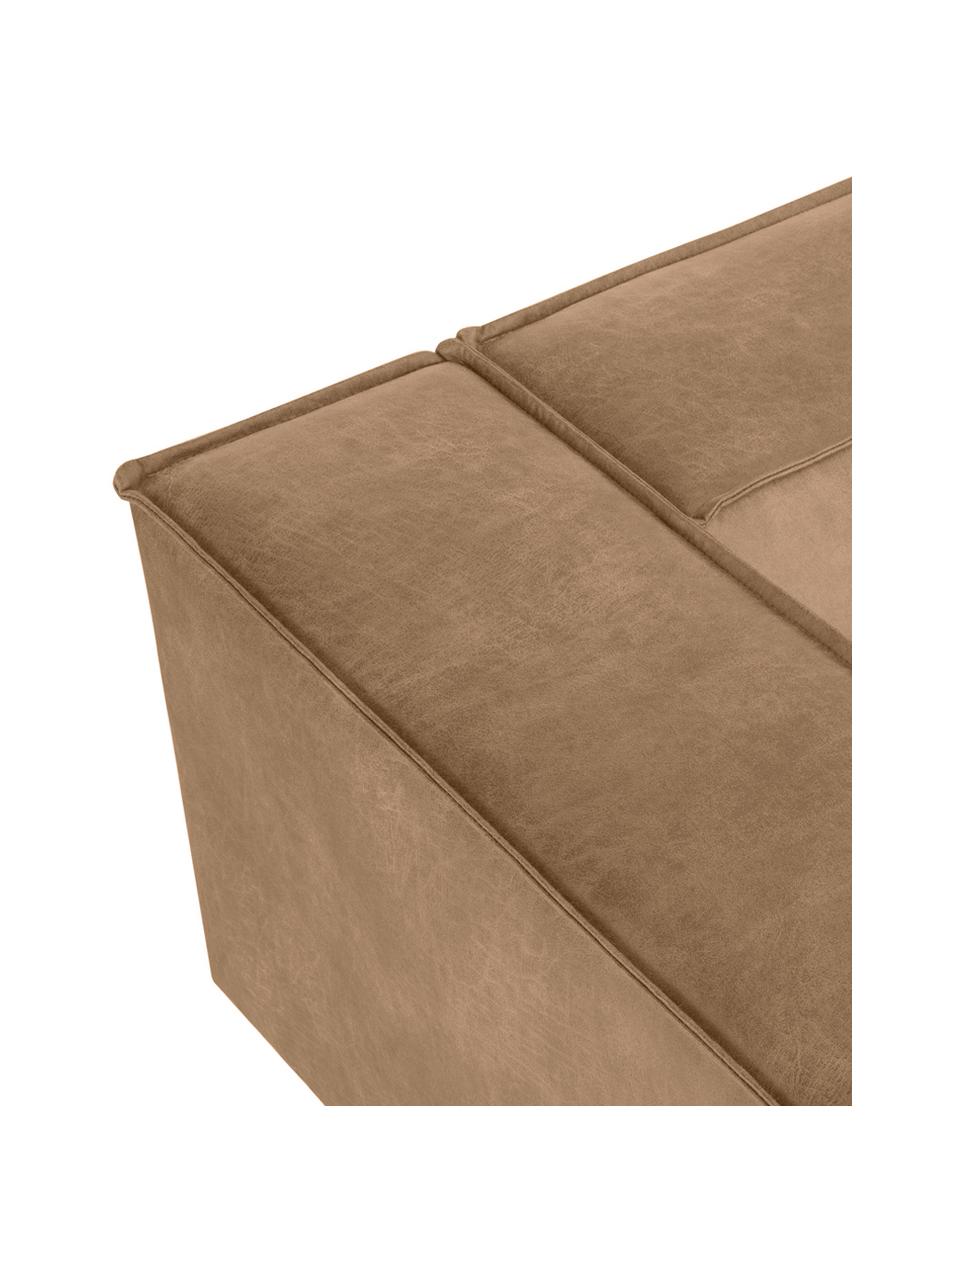 Leder-Sofa Abigail (3-Sitzer) in Braungrau mit Metall-Füssen, Bezug: Lederfaserstoff (70% Lede, Beine: Metall, lackiert, Leder Braungrau, B 230 x T 95 cm